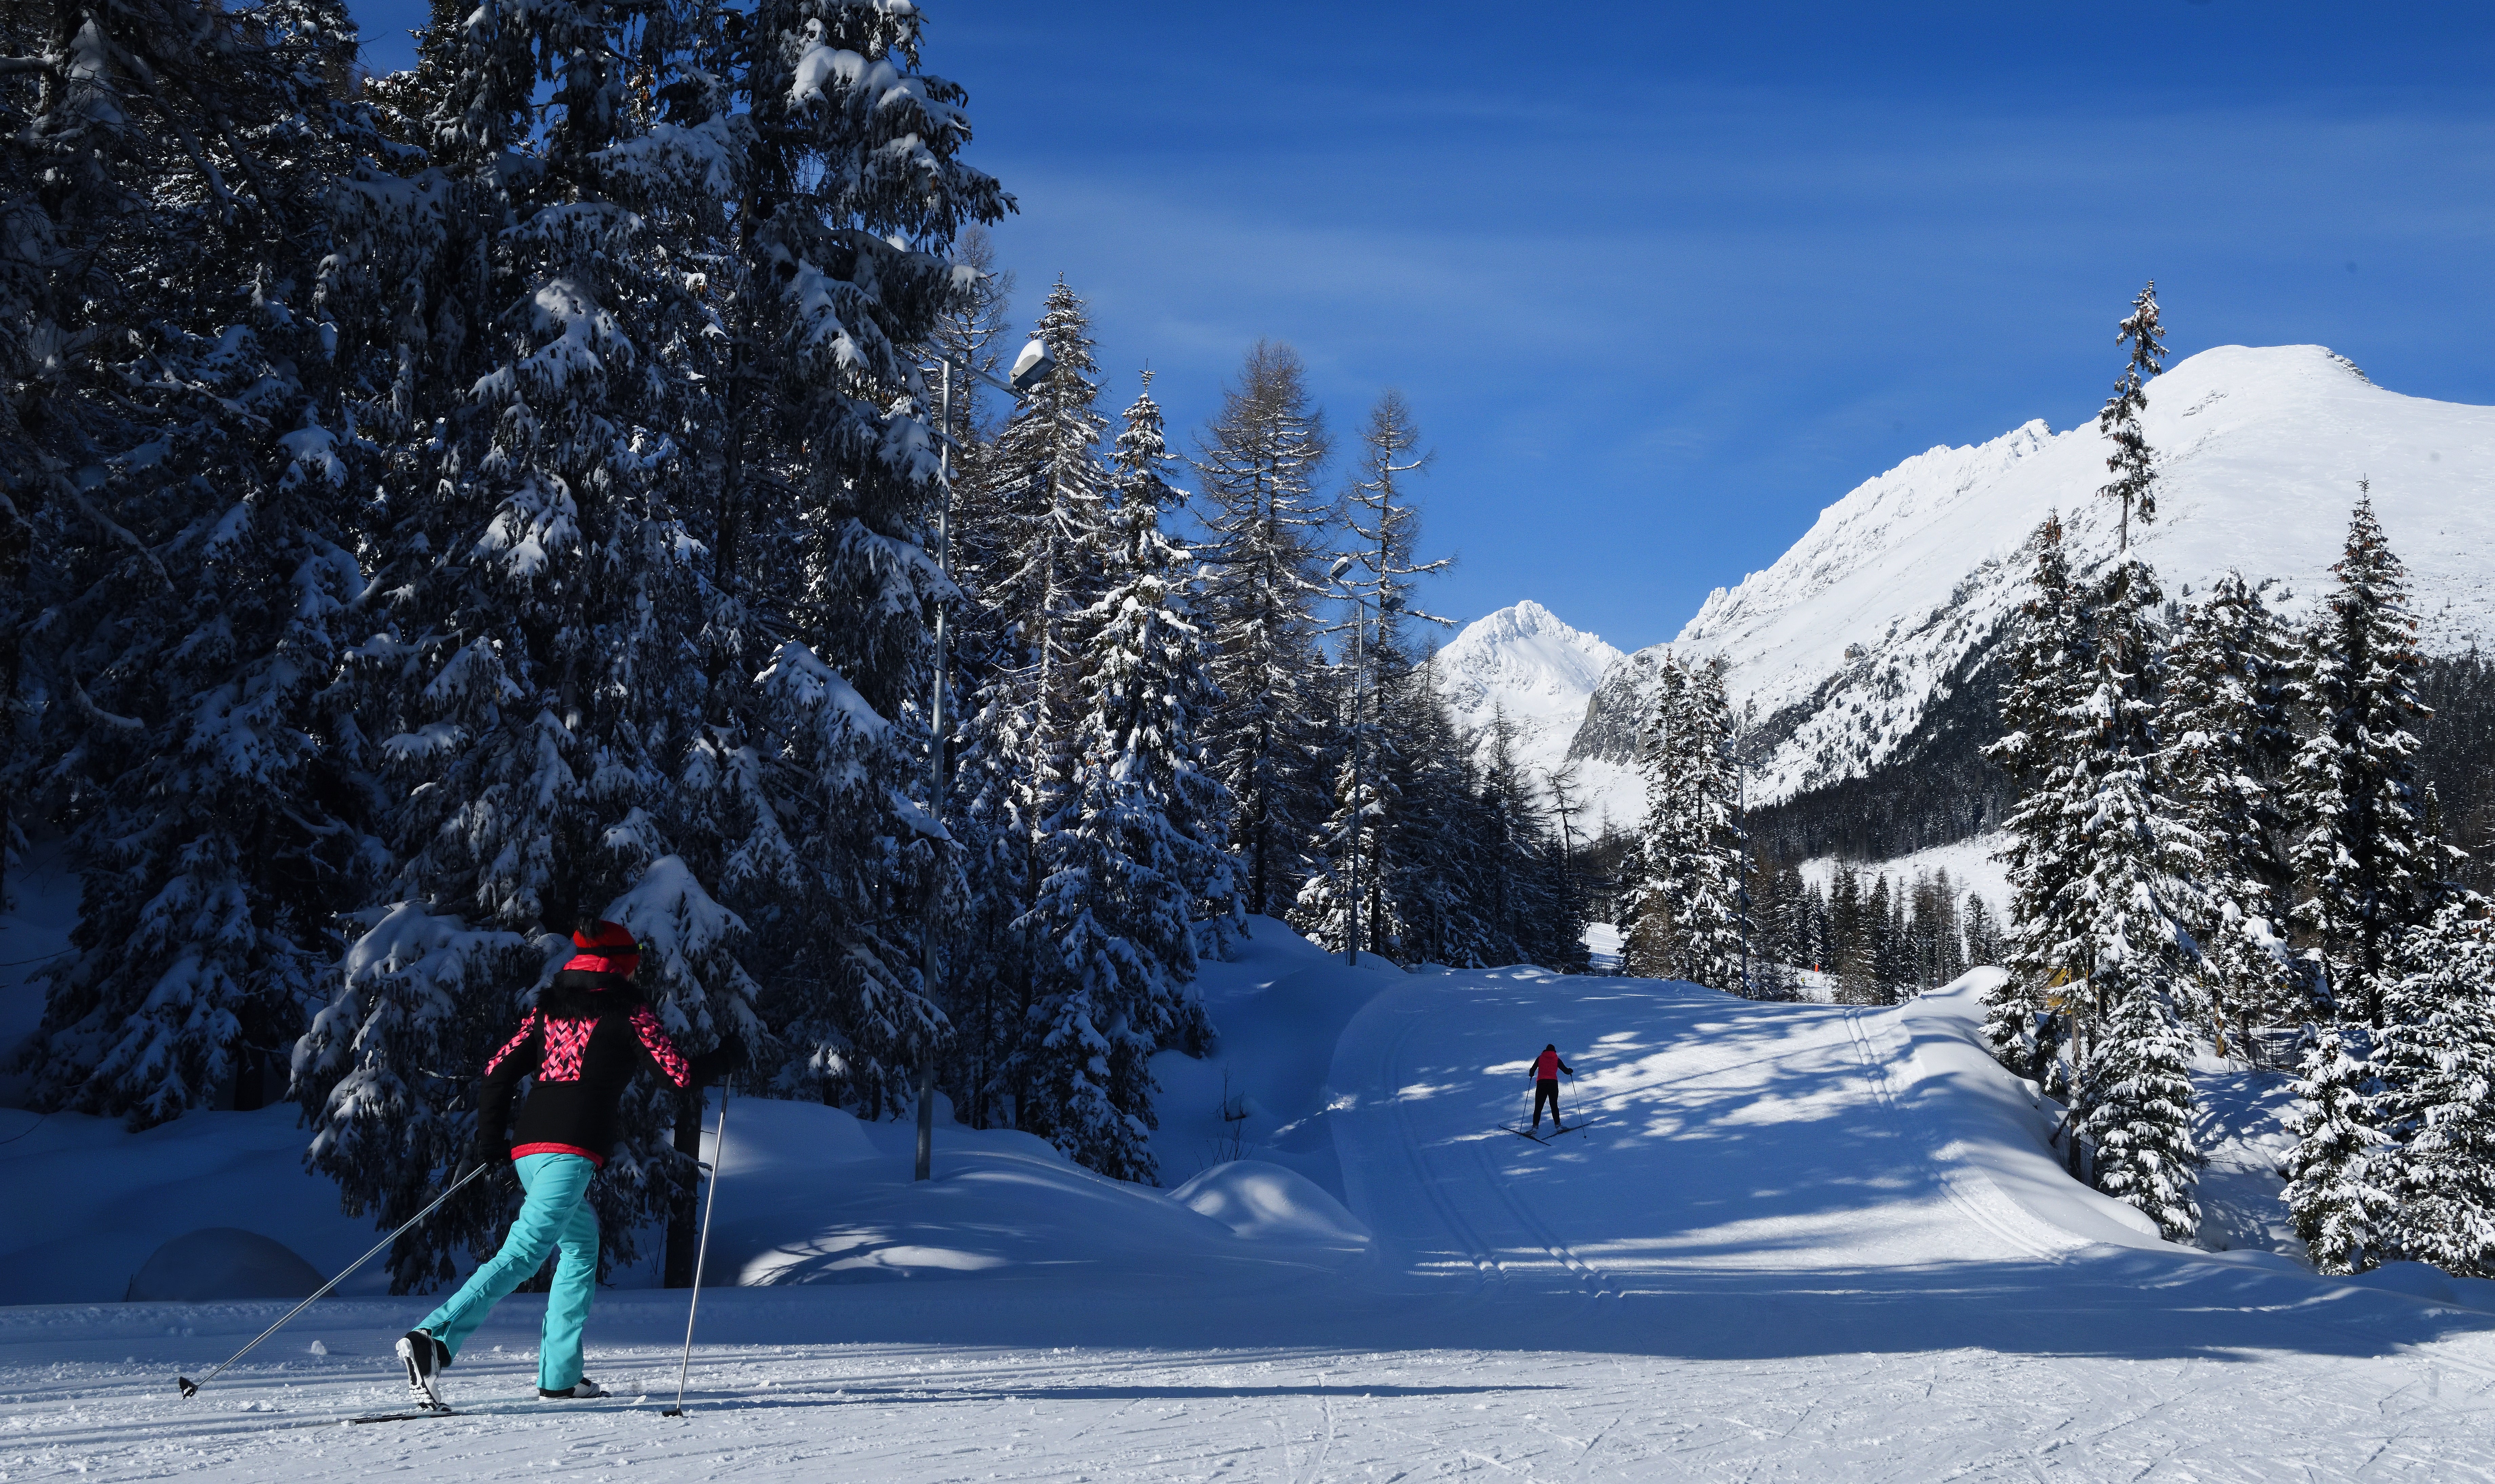 Plentiful cross-country pistes mean Štrbské Pleso is skiable even in bad weather